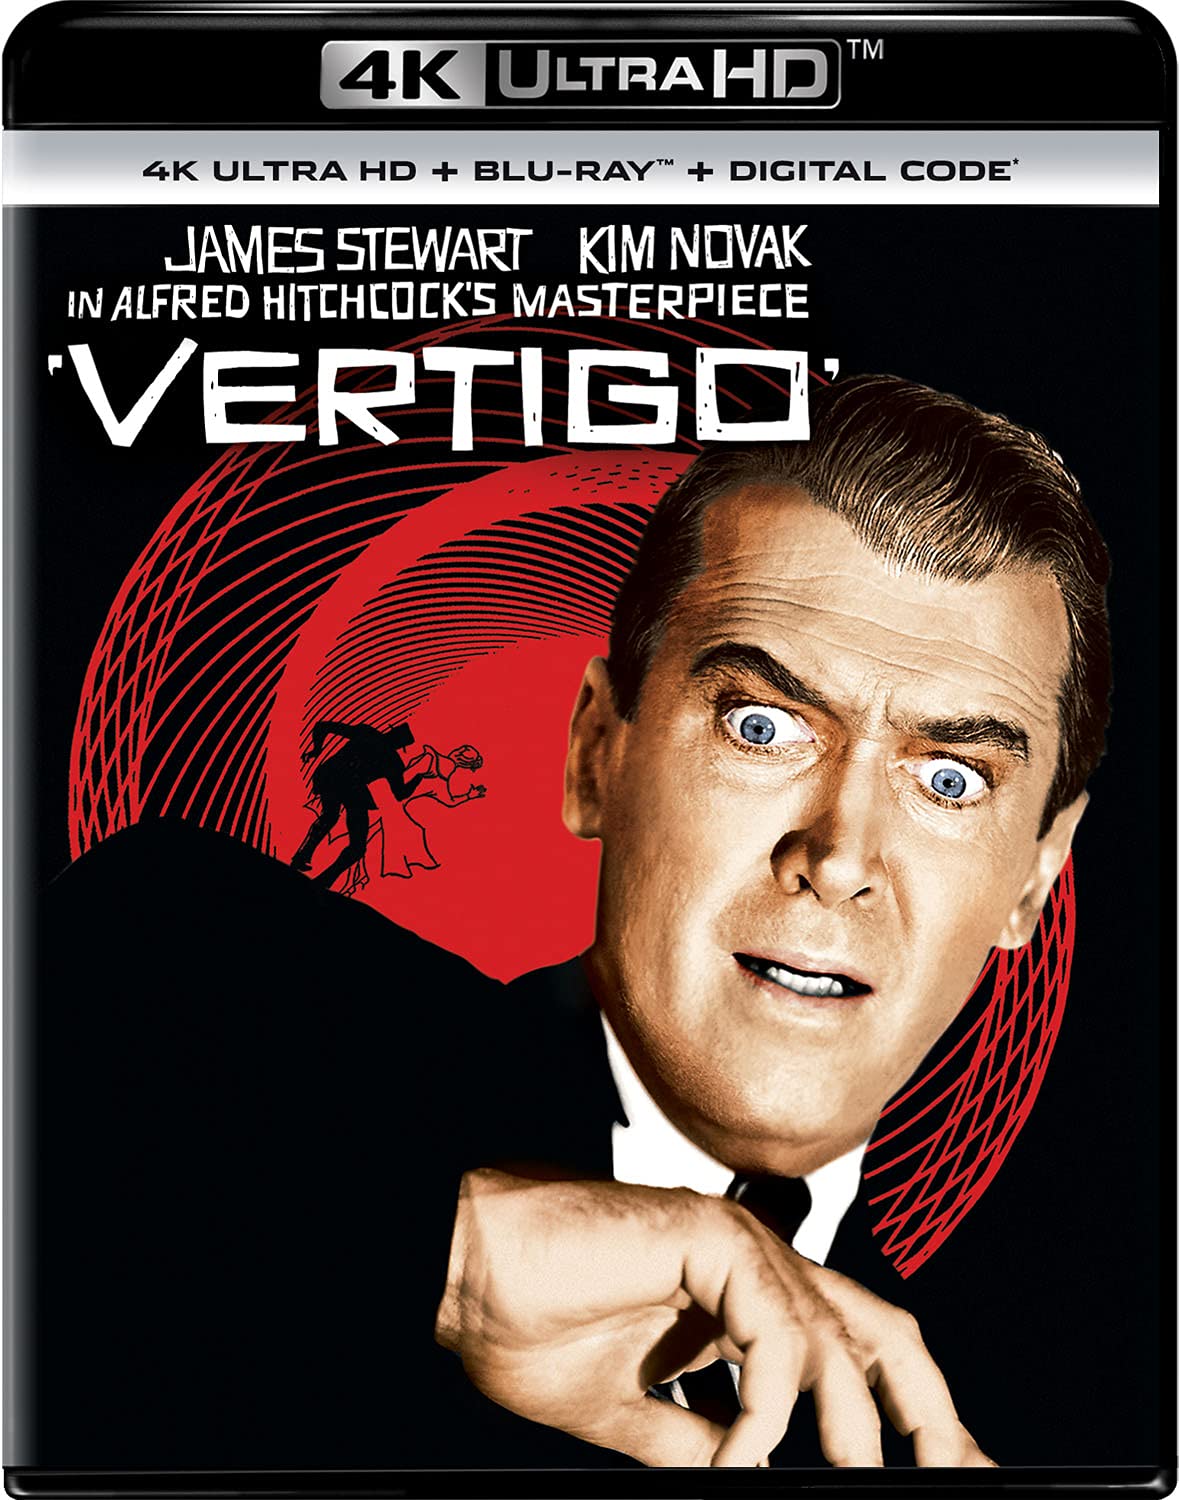 Vertigo 4k Blu-ray front